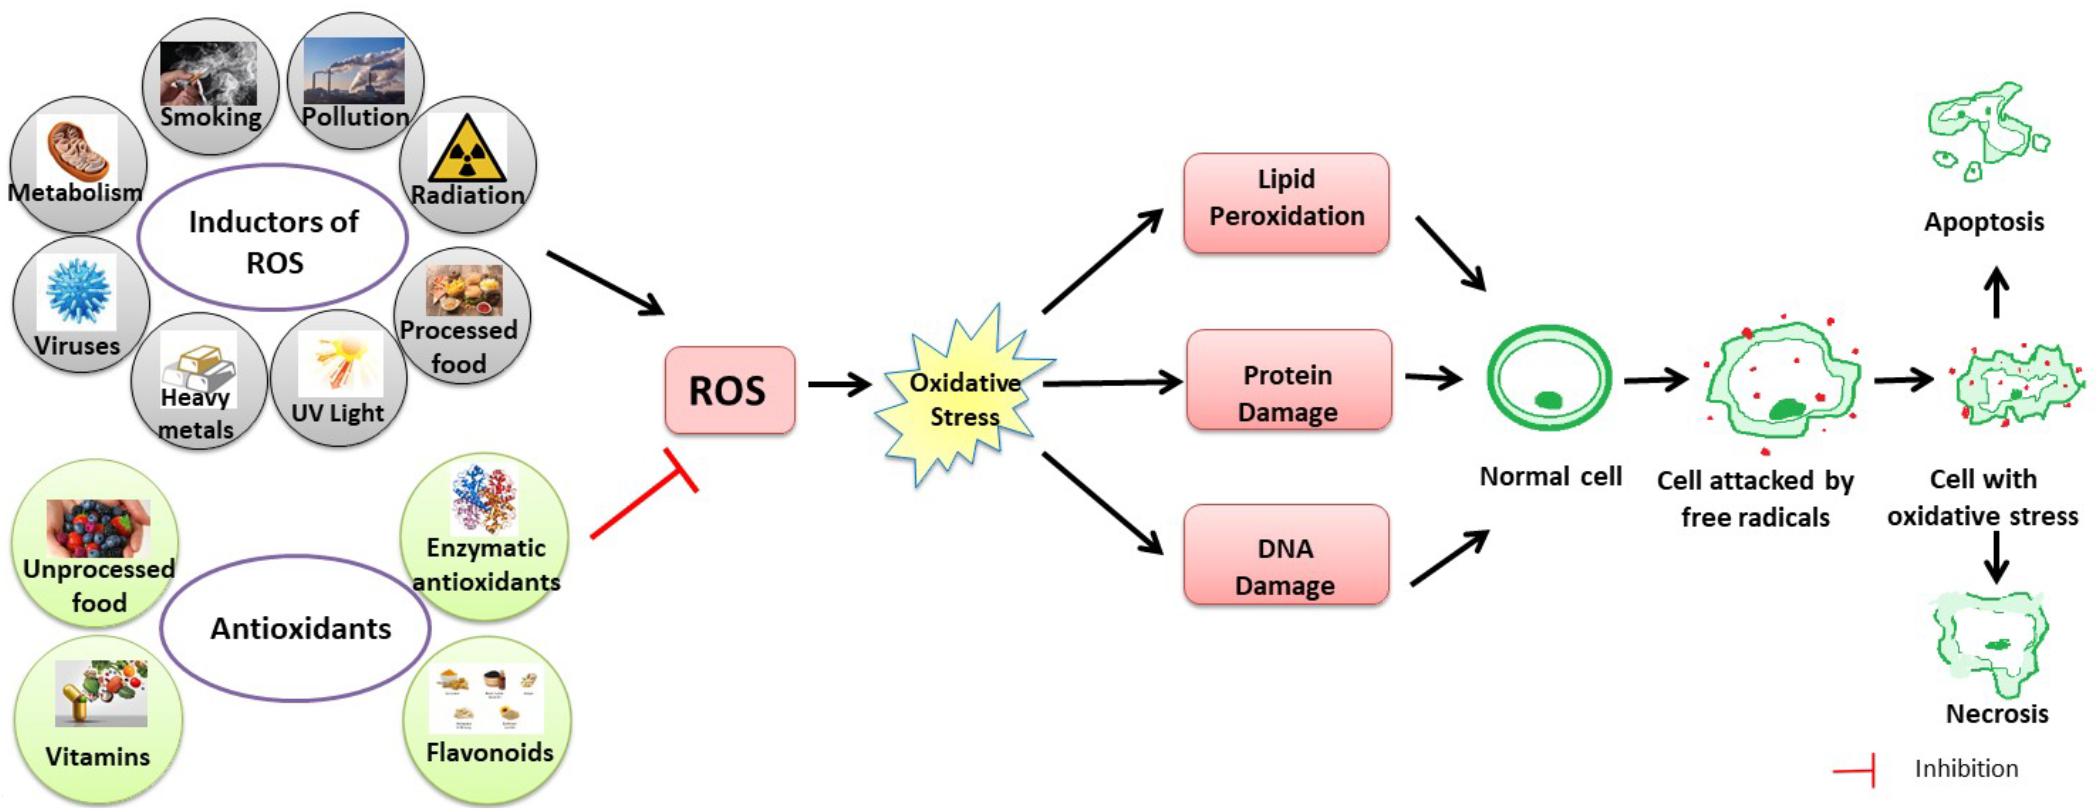 oxidative stress and health